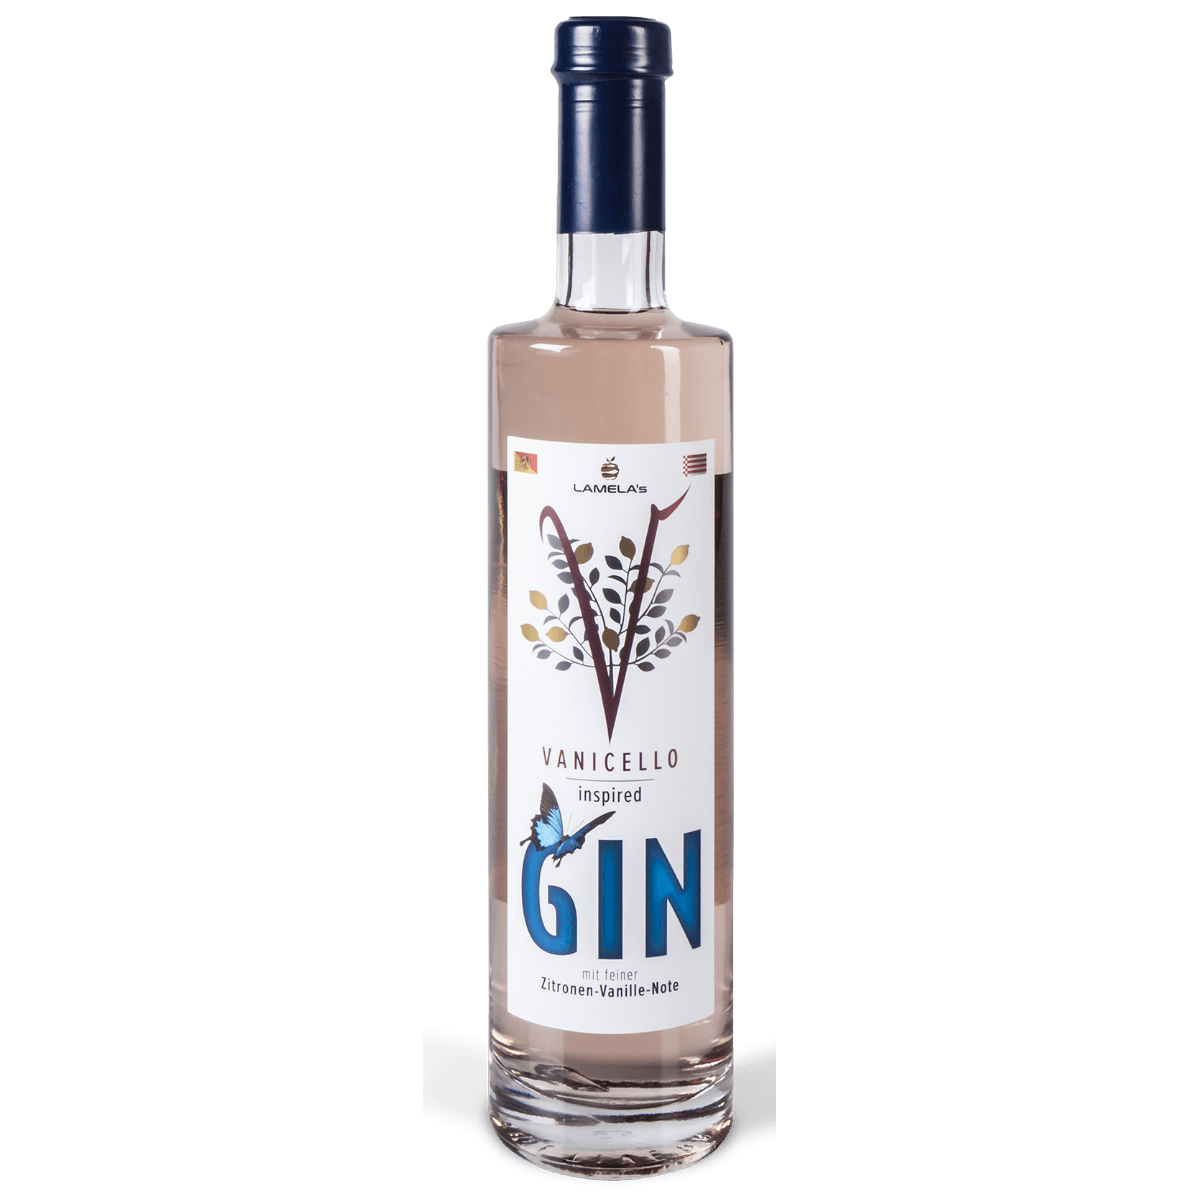 Vanicello inspired Gin 0,5l - 30% vol. - Hansa-Spirits